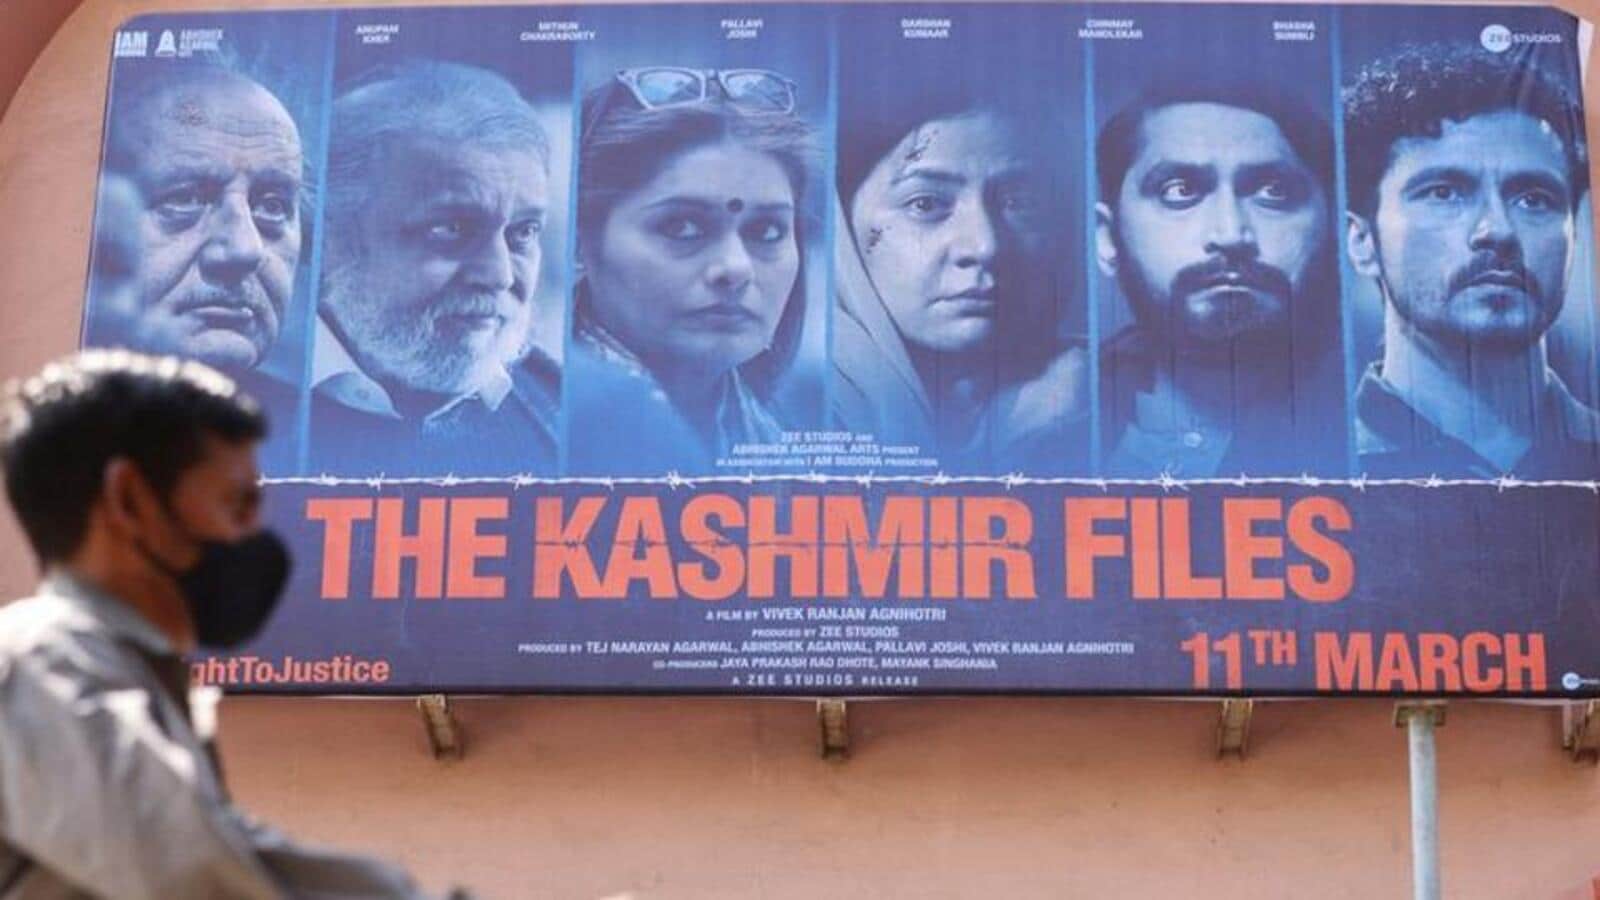 ‘Watch movie first’: Bihar speaker advises Oppn MLAs on ‘The Kashmir Files’ row